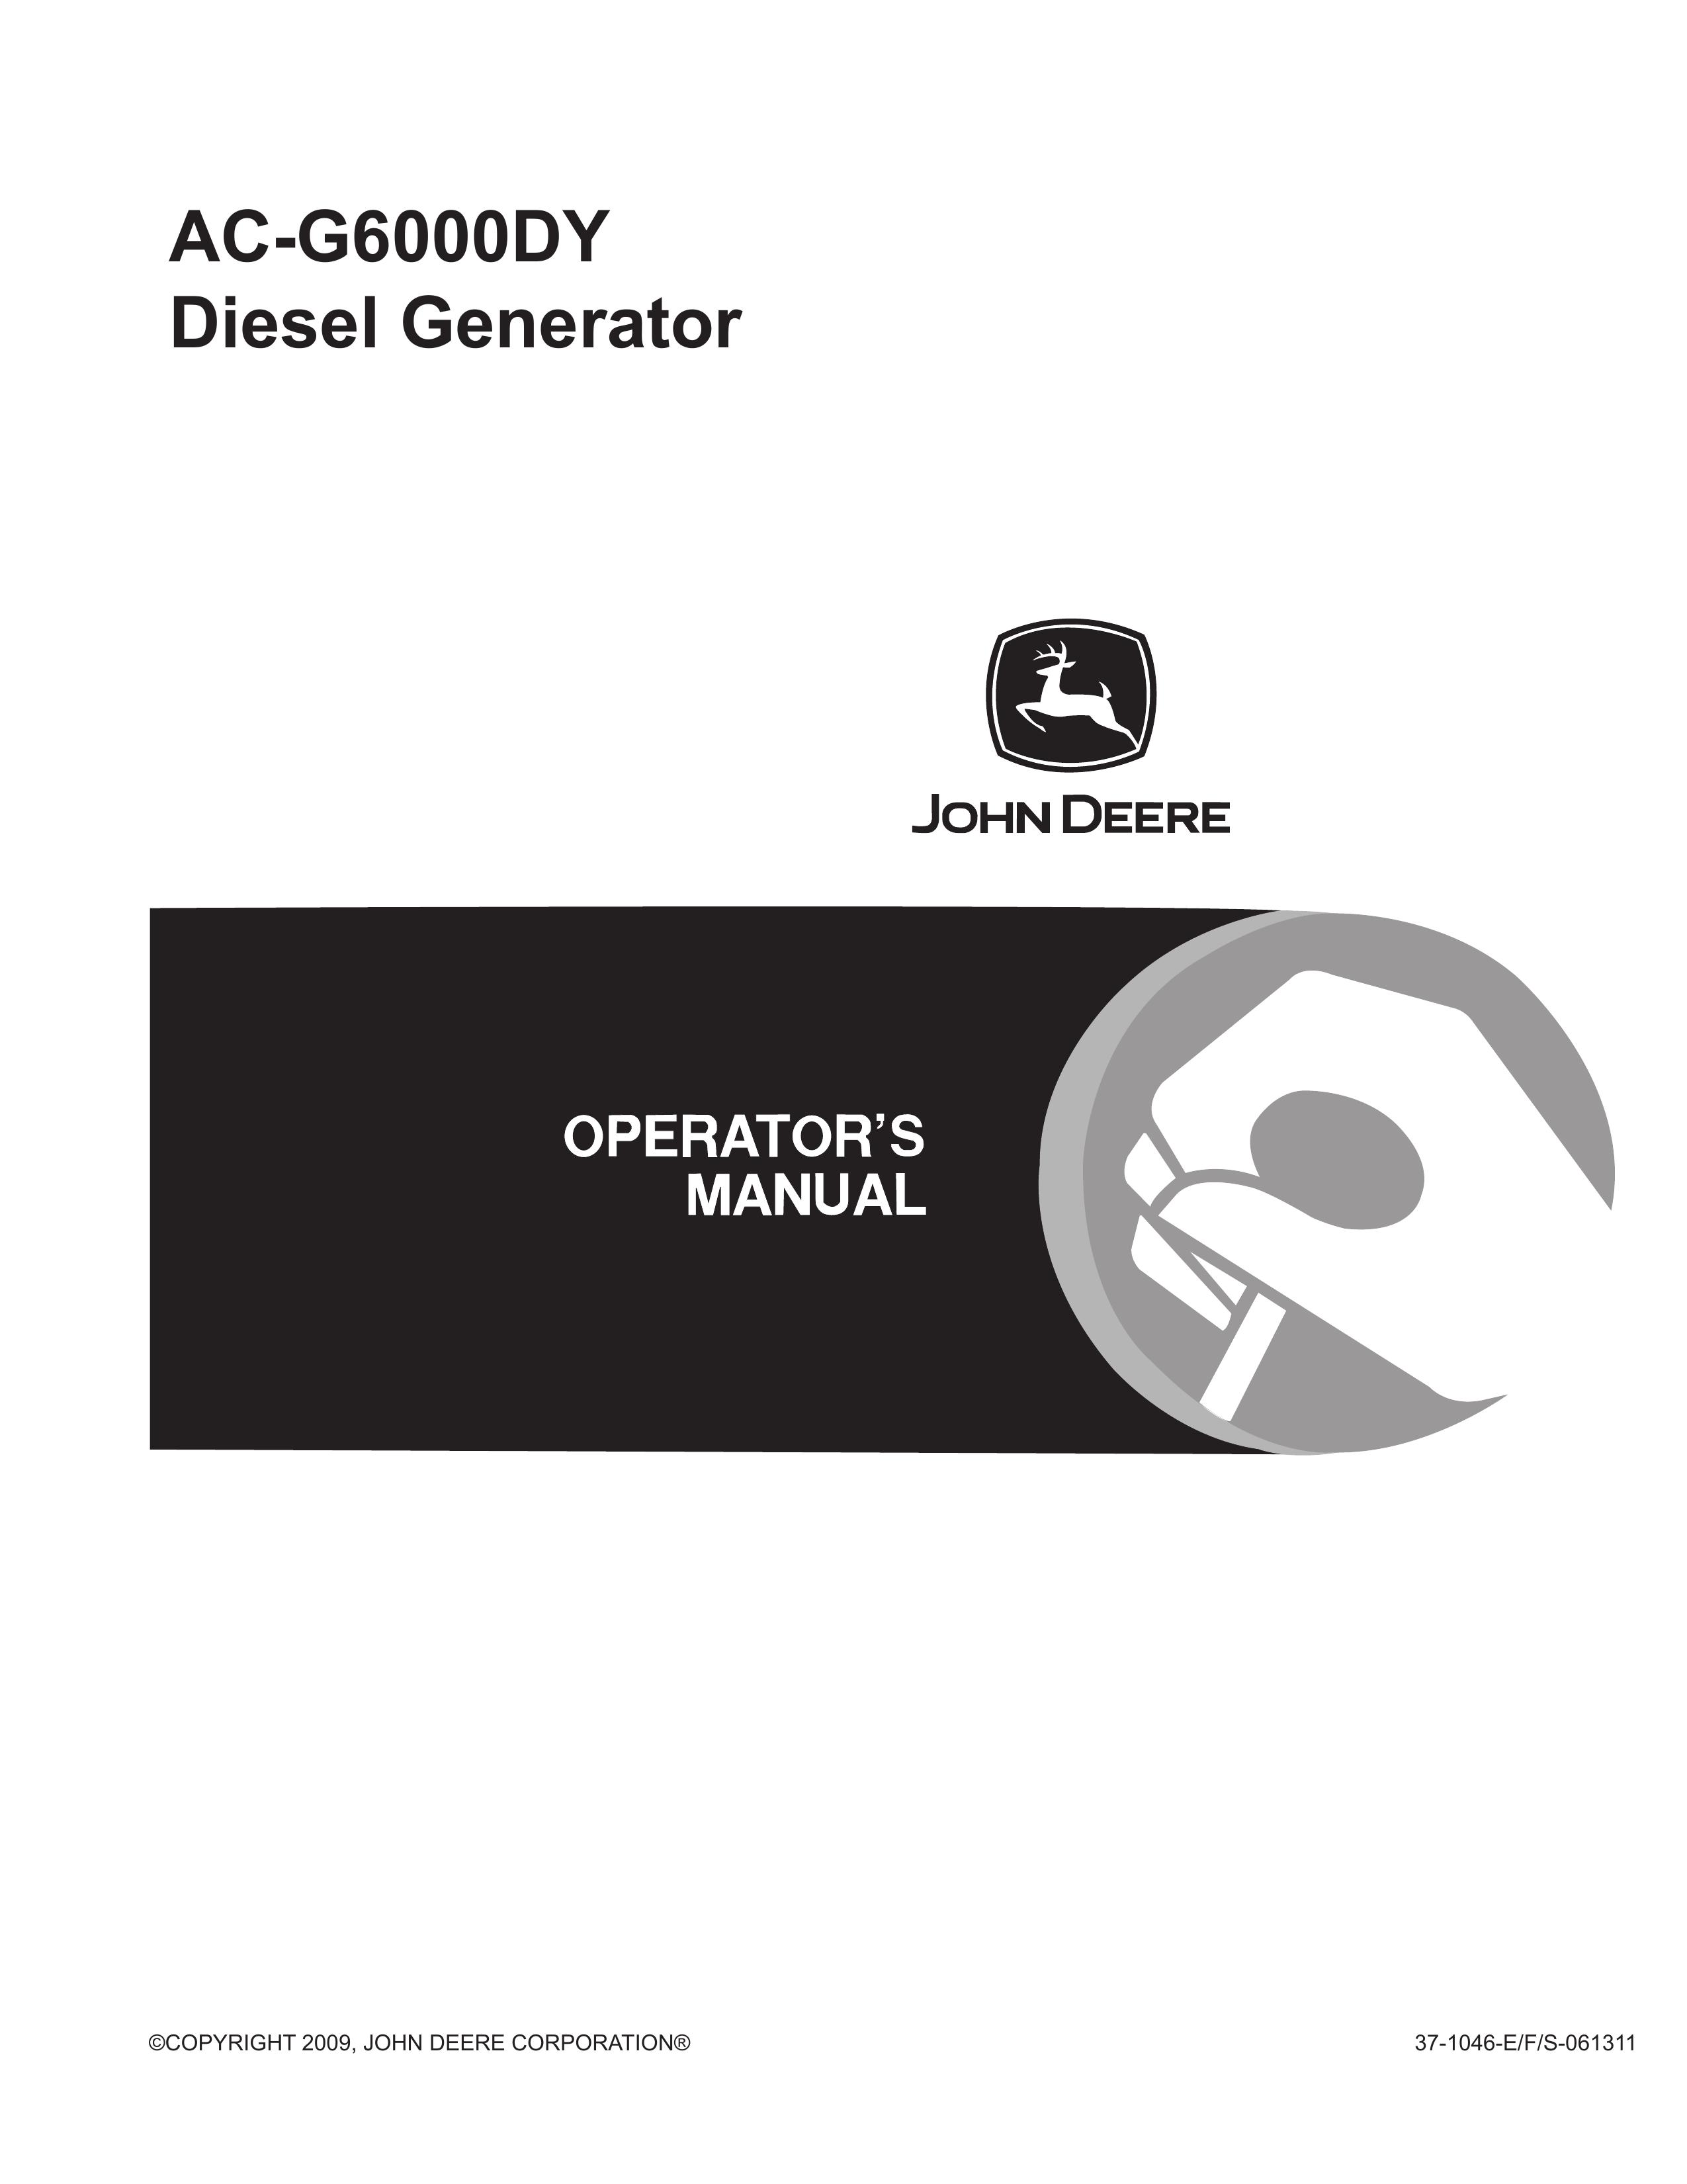 John Deere AC-G6000DY Portable Generator User Manual